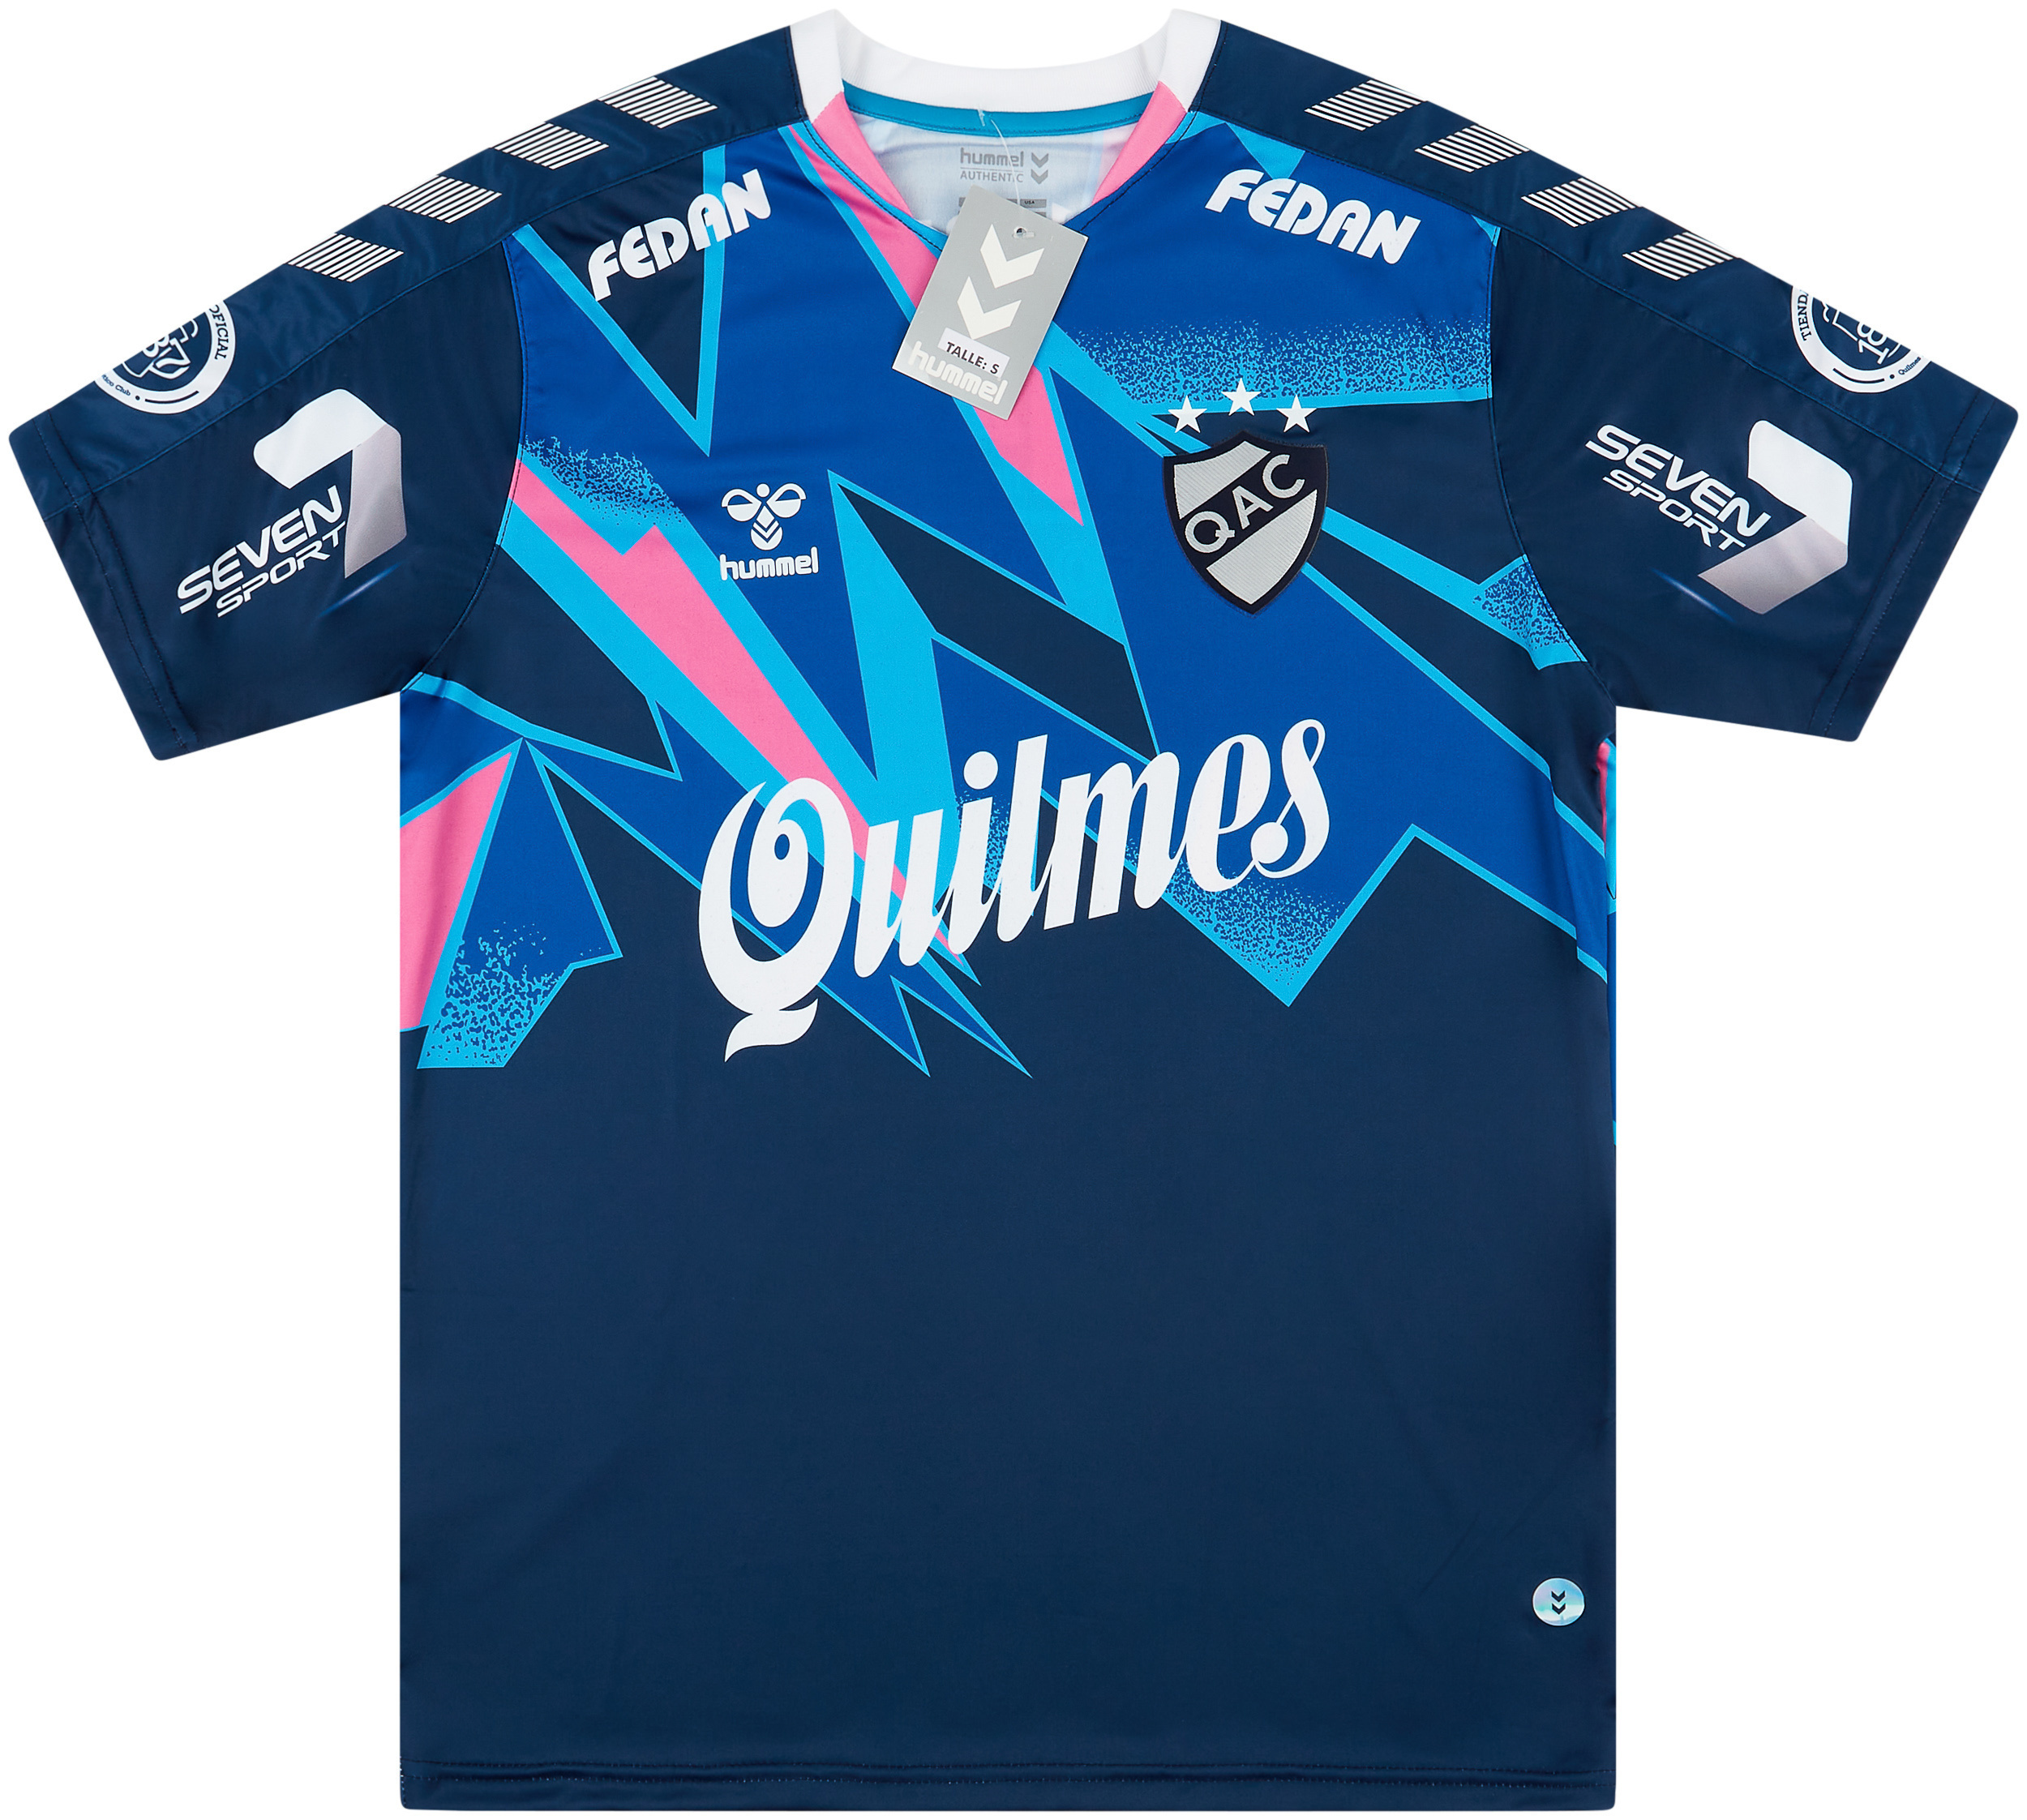 Quilmes  Uit  shirt  (Original)